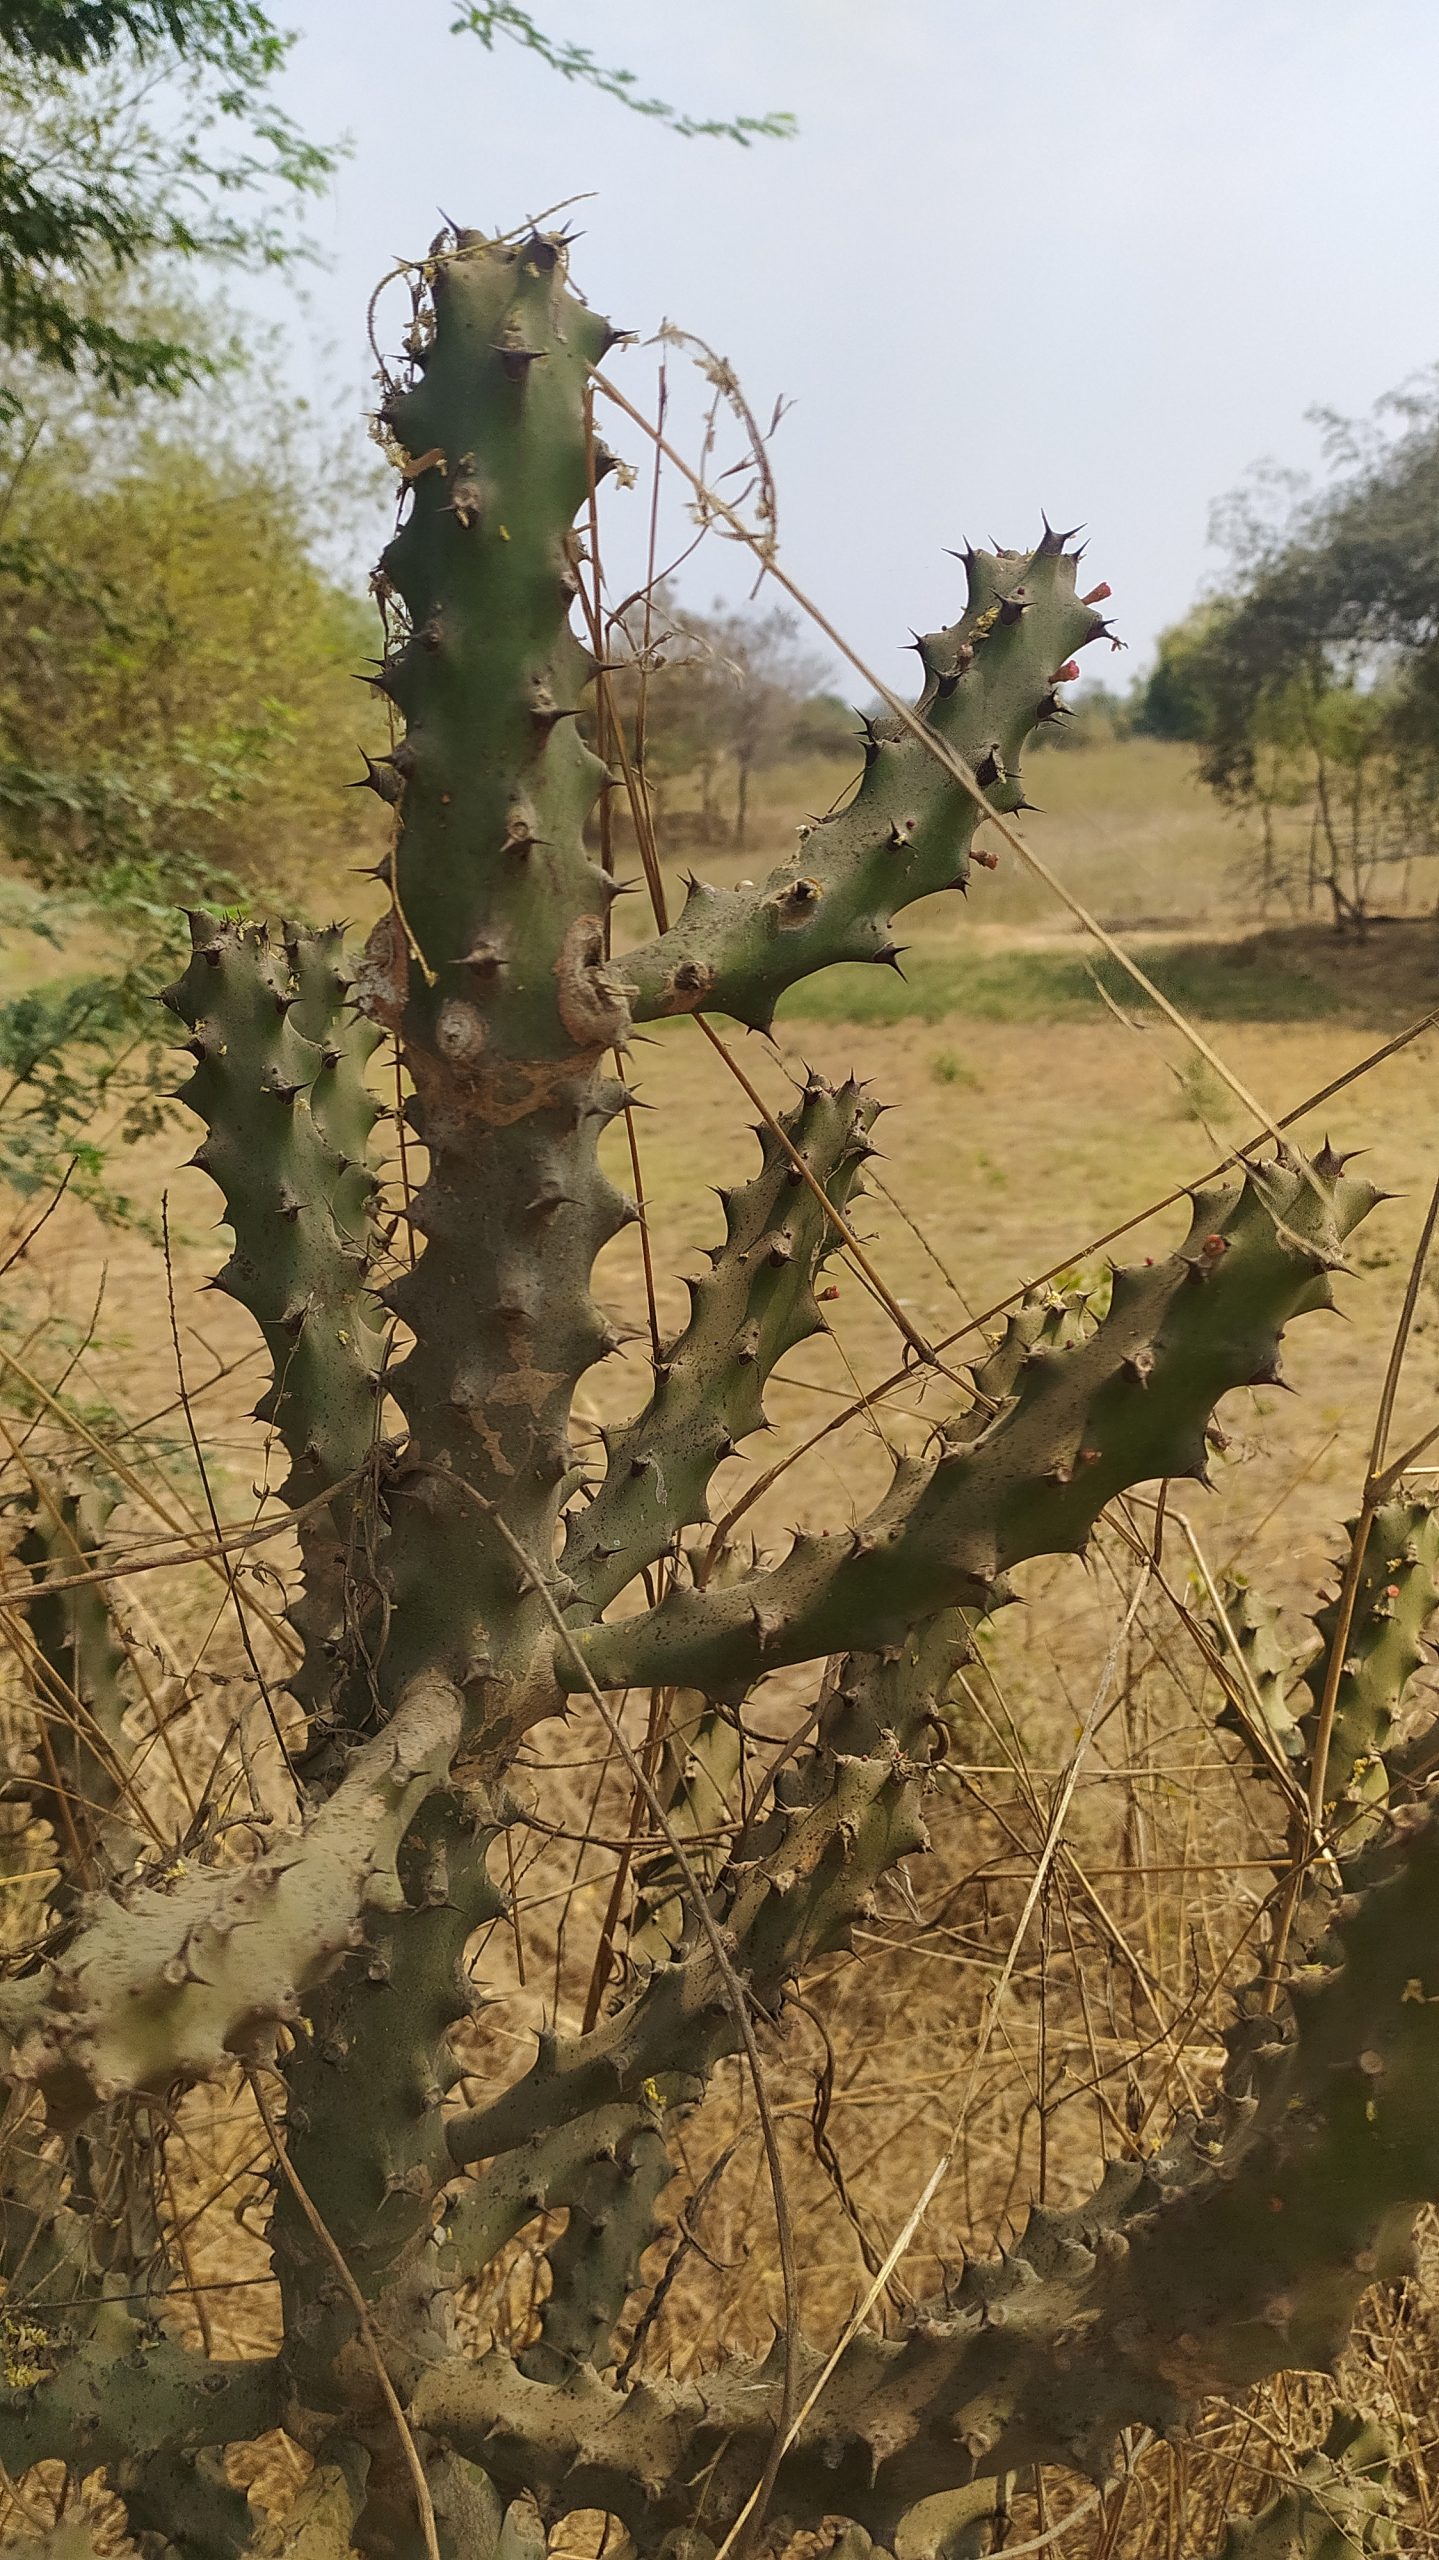 Thorny cactus plant